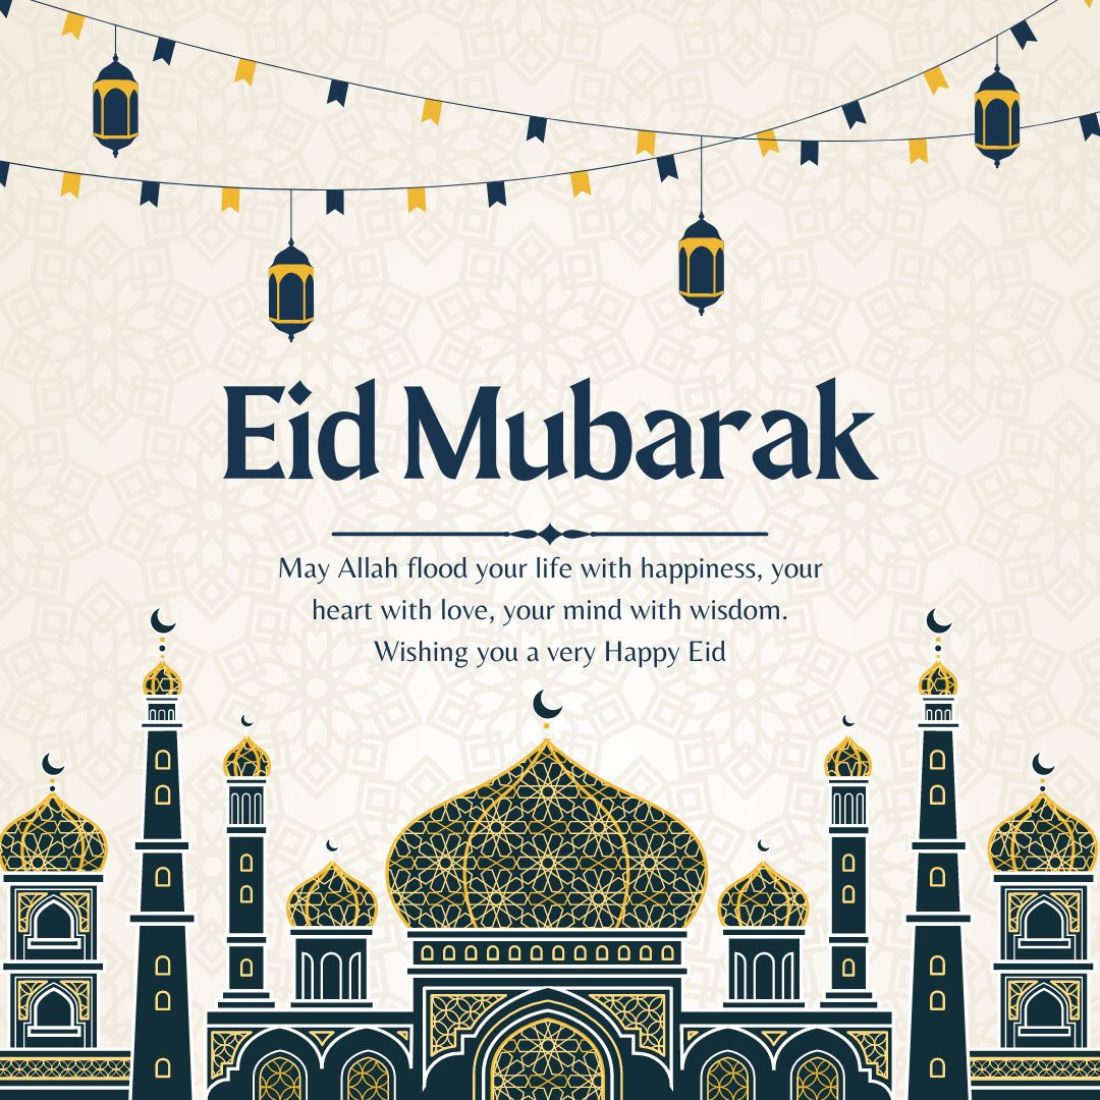 Festival Eid Mubarak Instagram Post Template cover image.